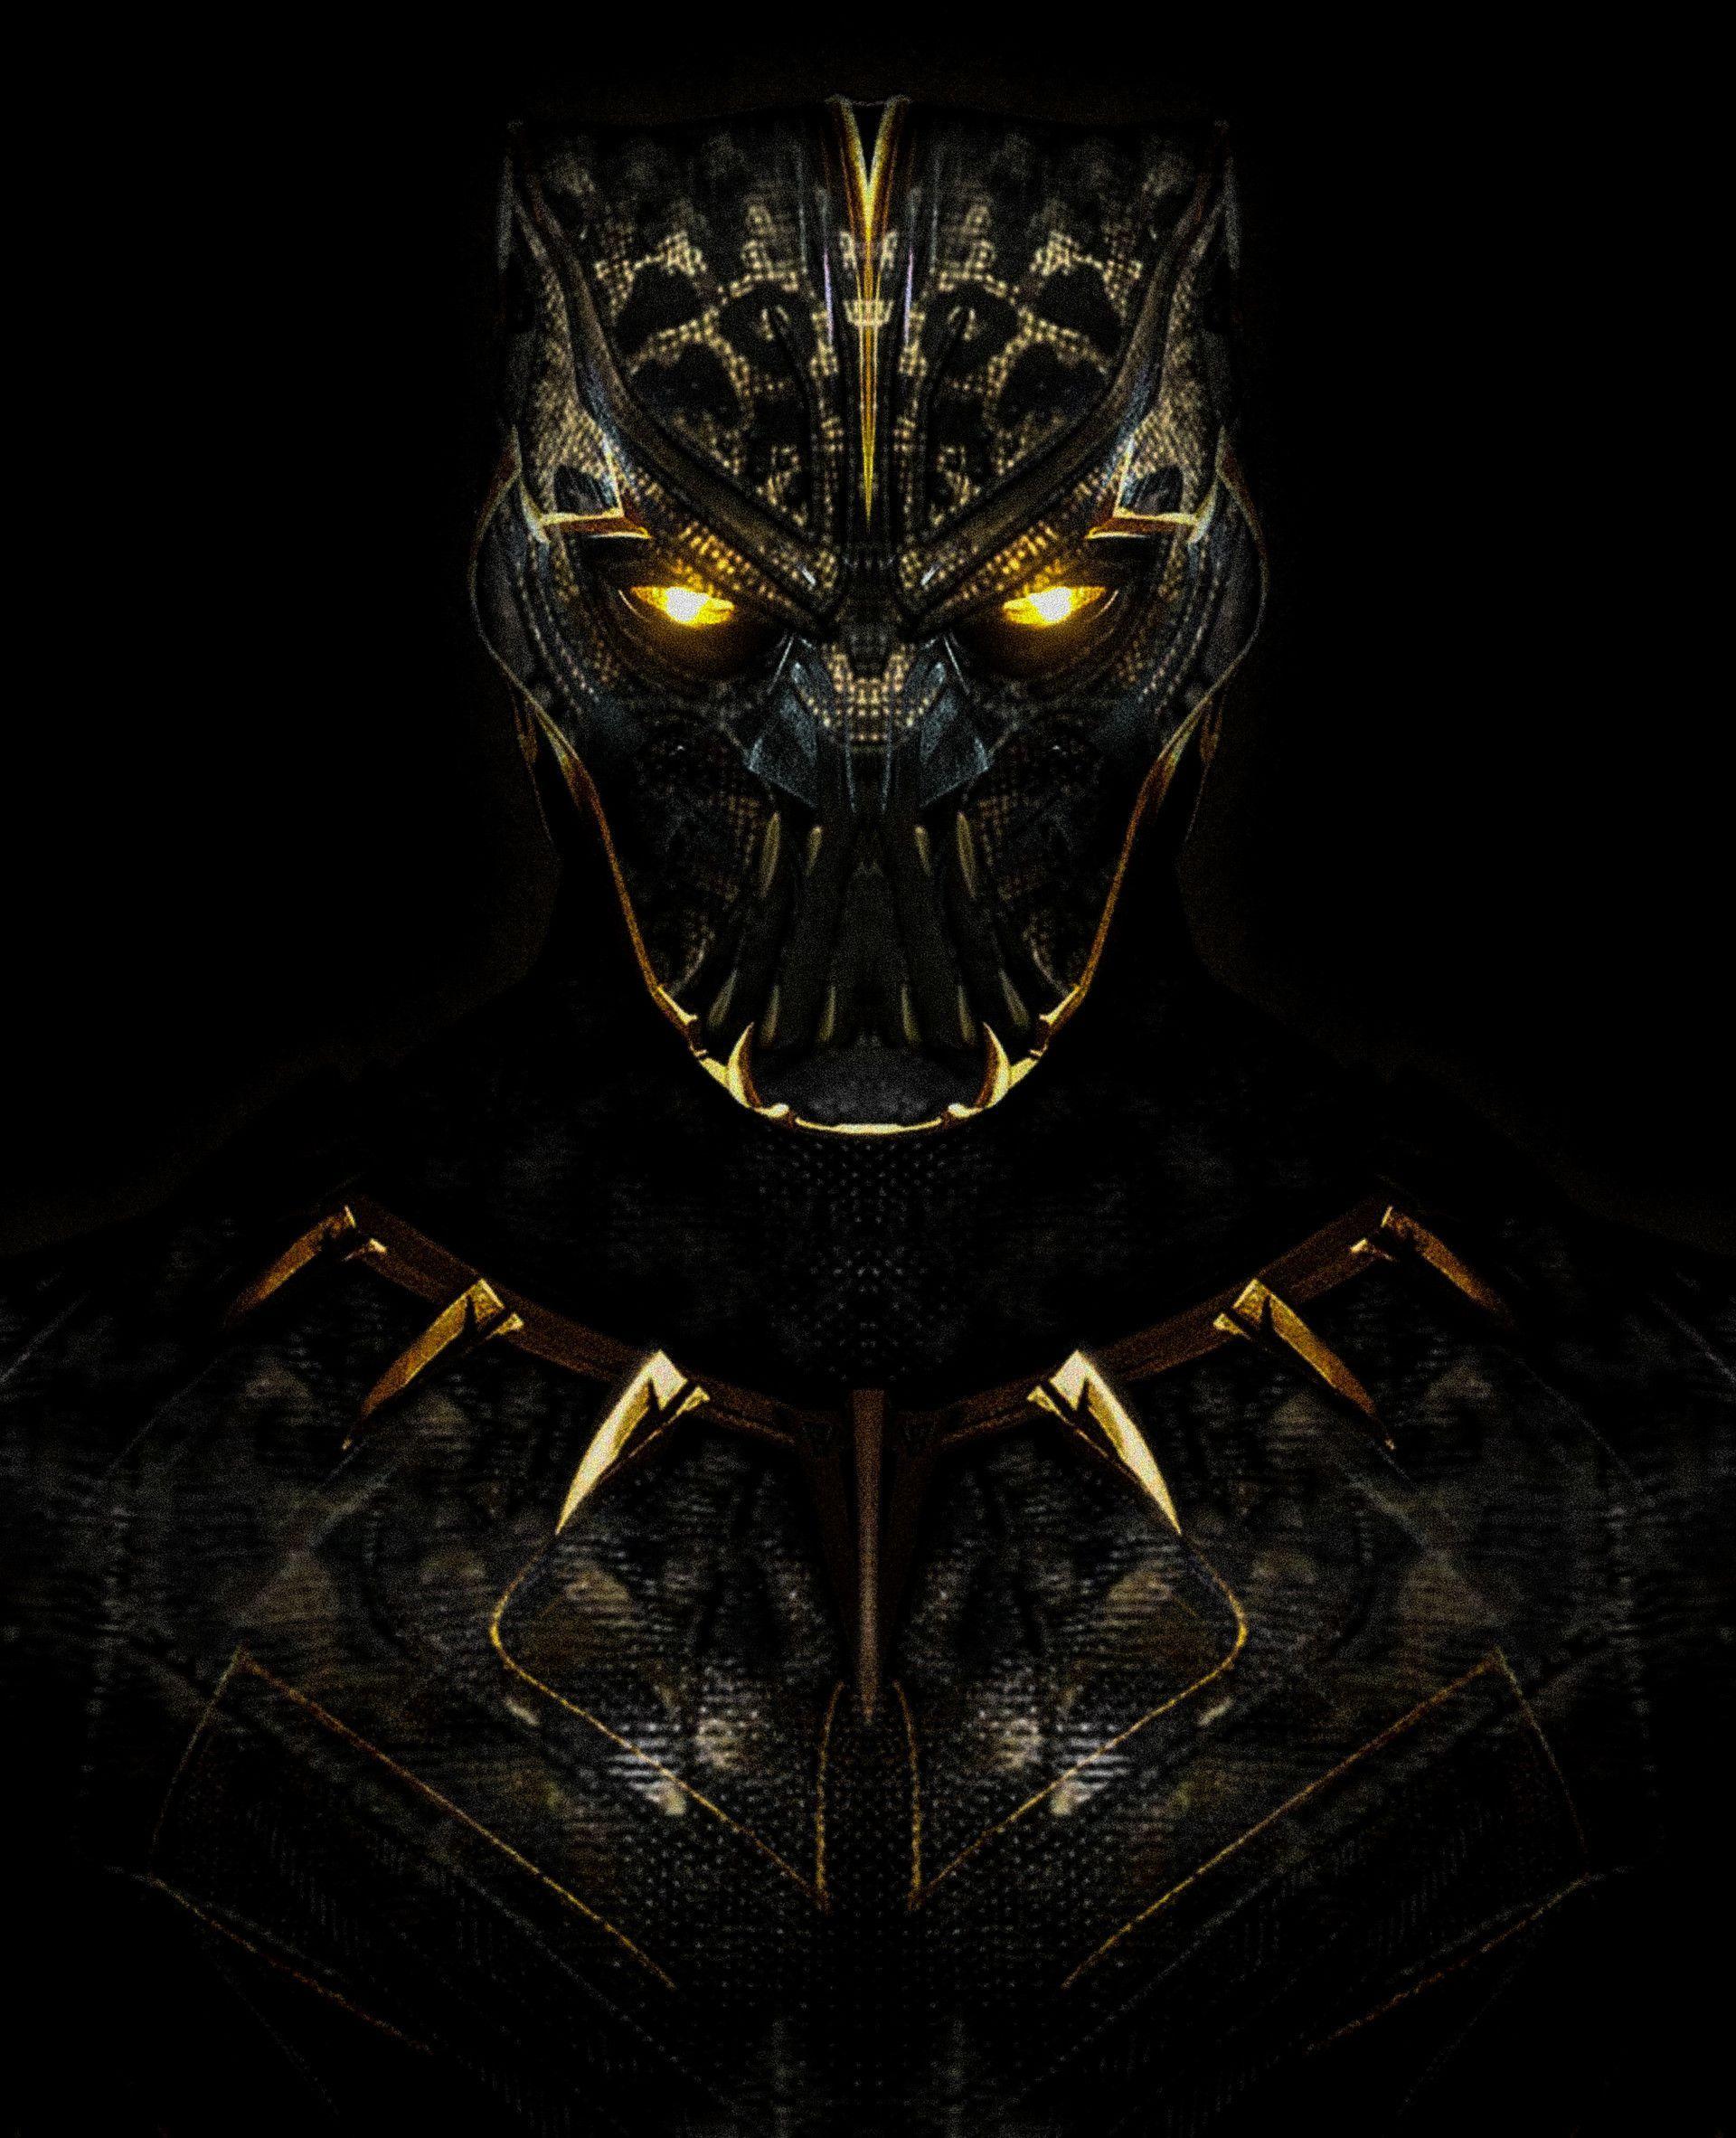 Black Panther Vs Killmonger Illustration Wallpapers